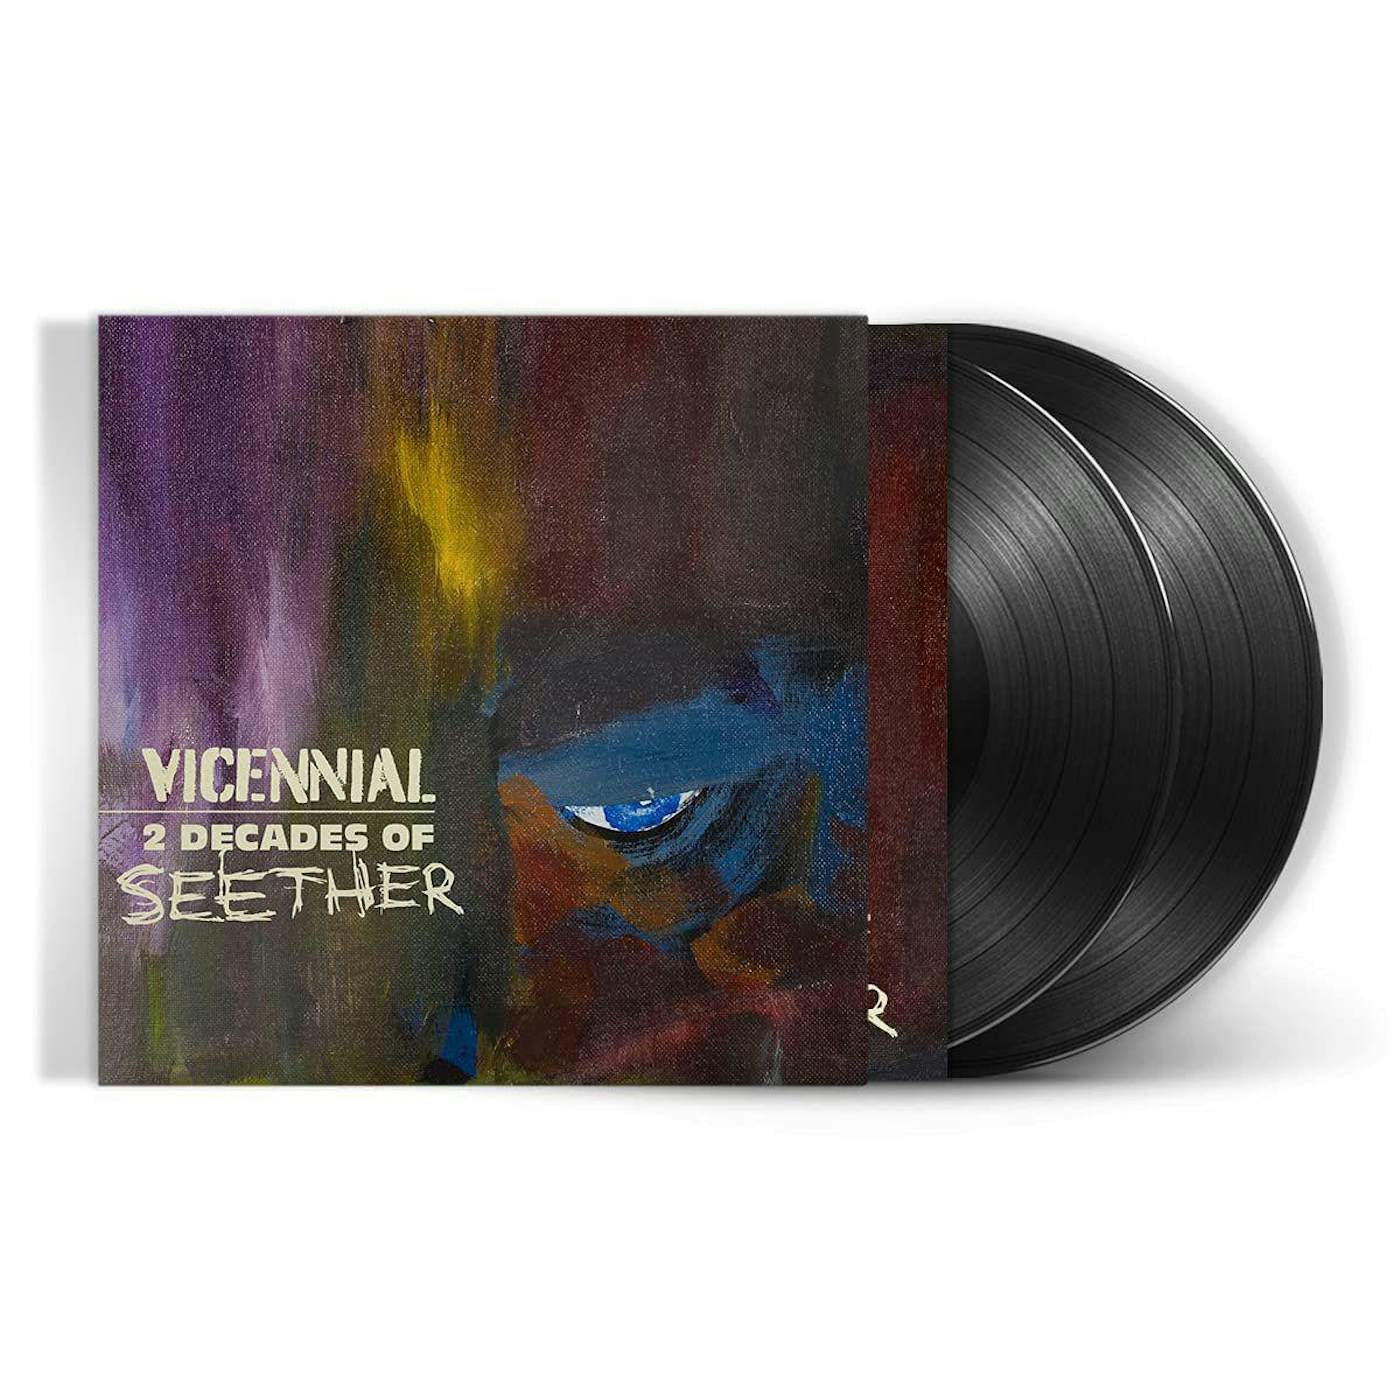 VICENNIAL - 2 DECADES OF SEETHER (2LP) Vinyl Record